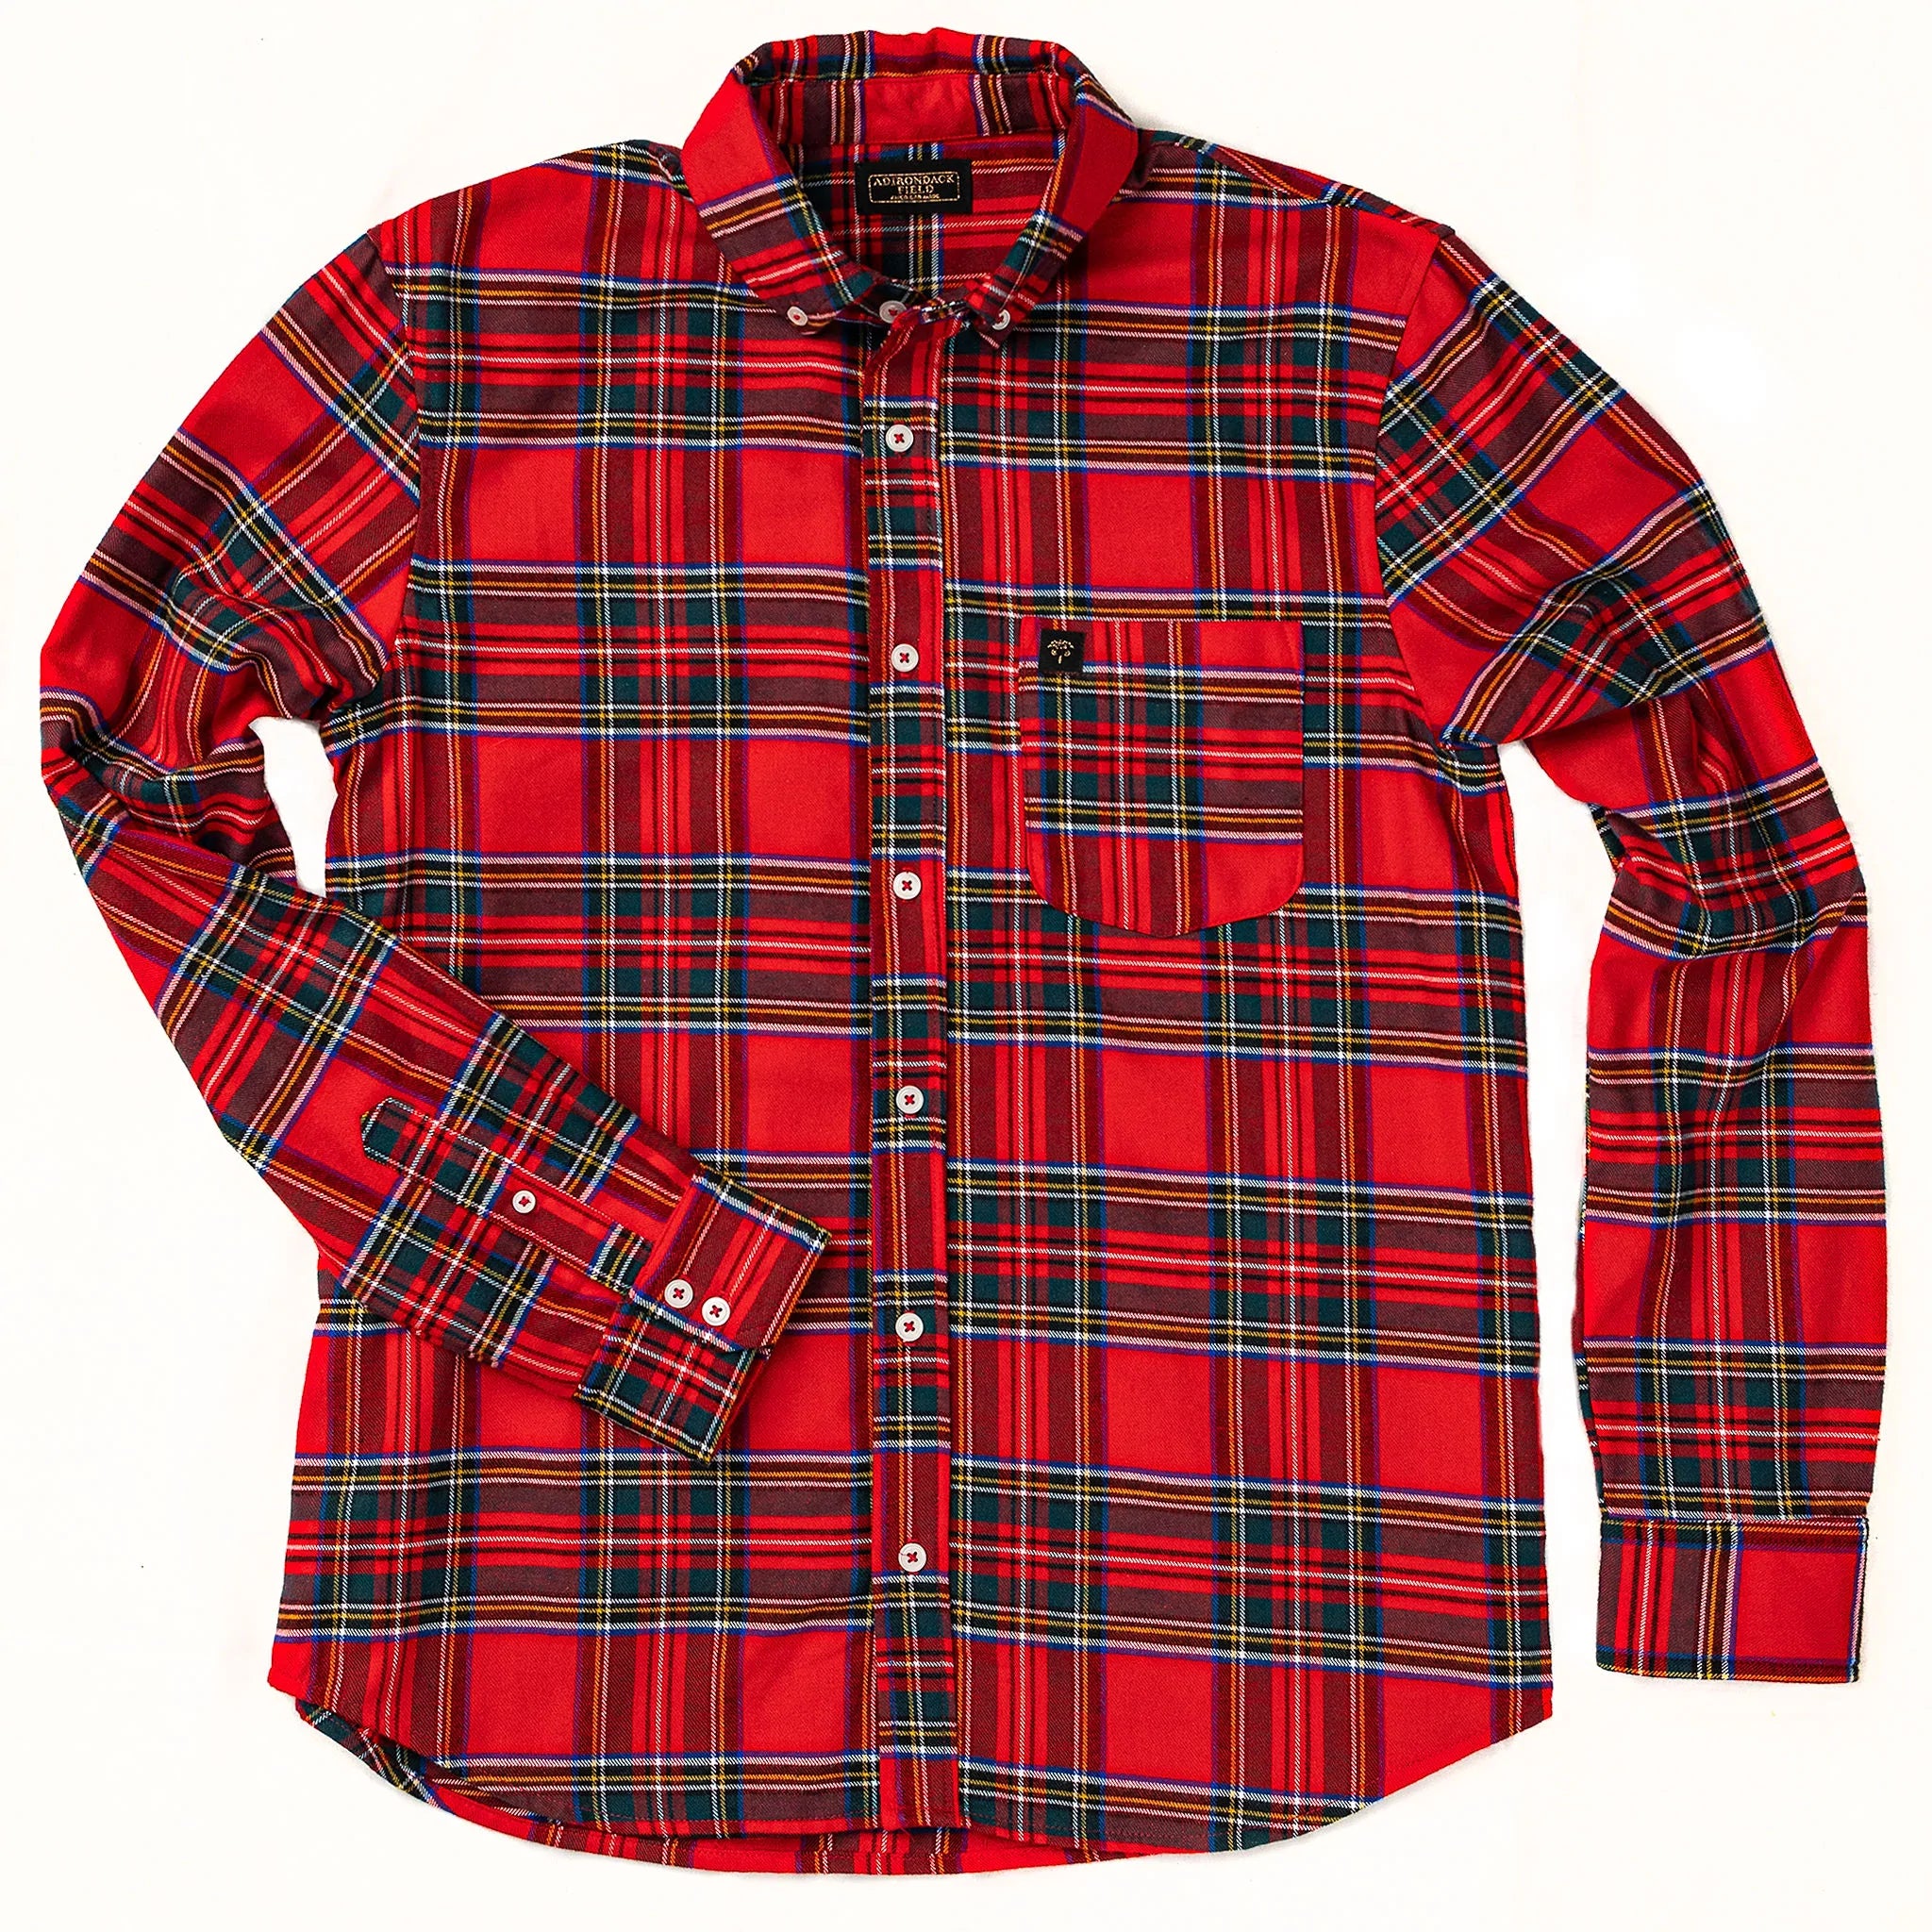 Adirondack Field Men's Colvin Collection Flannel Shirt